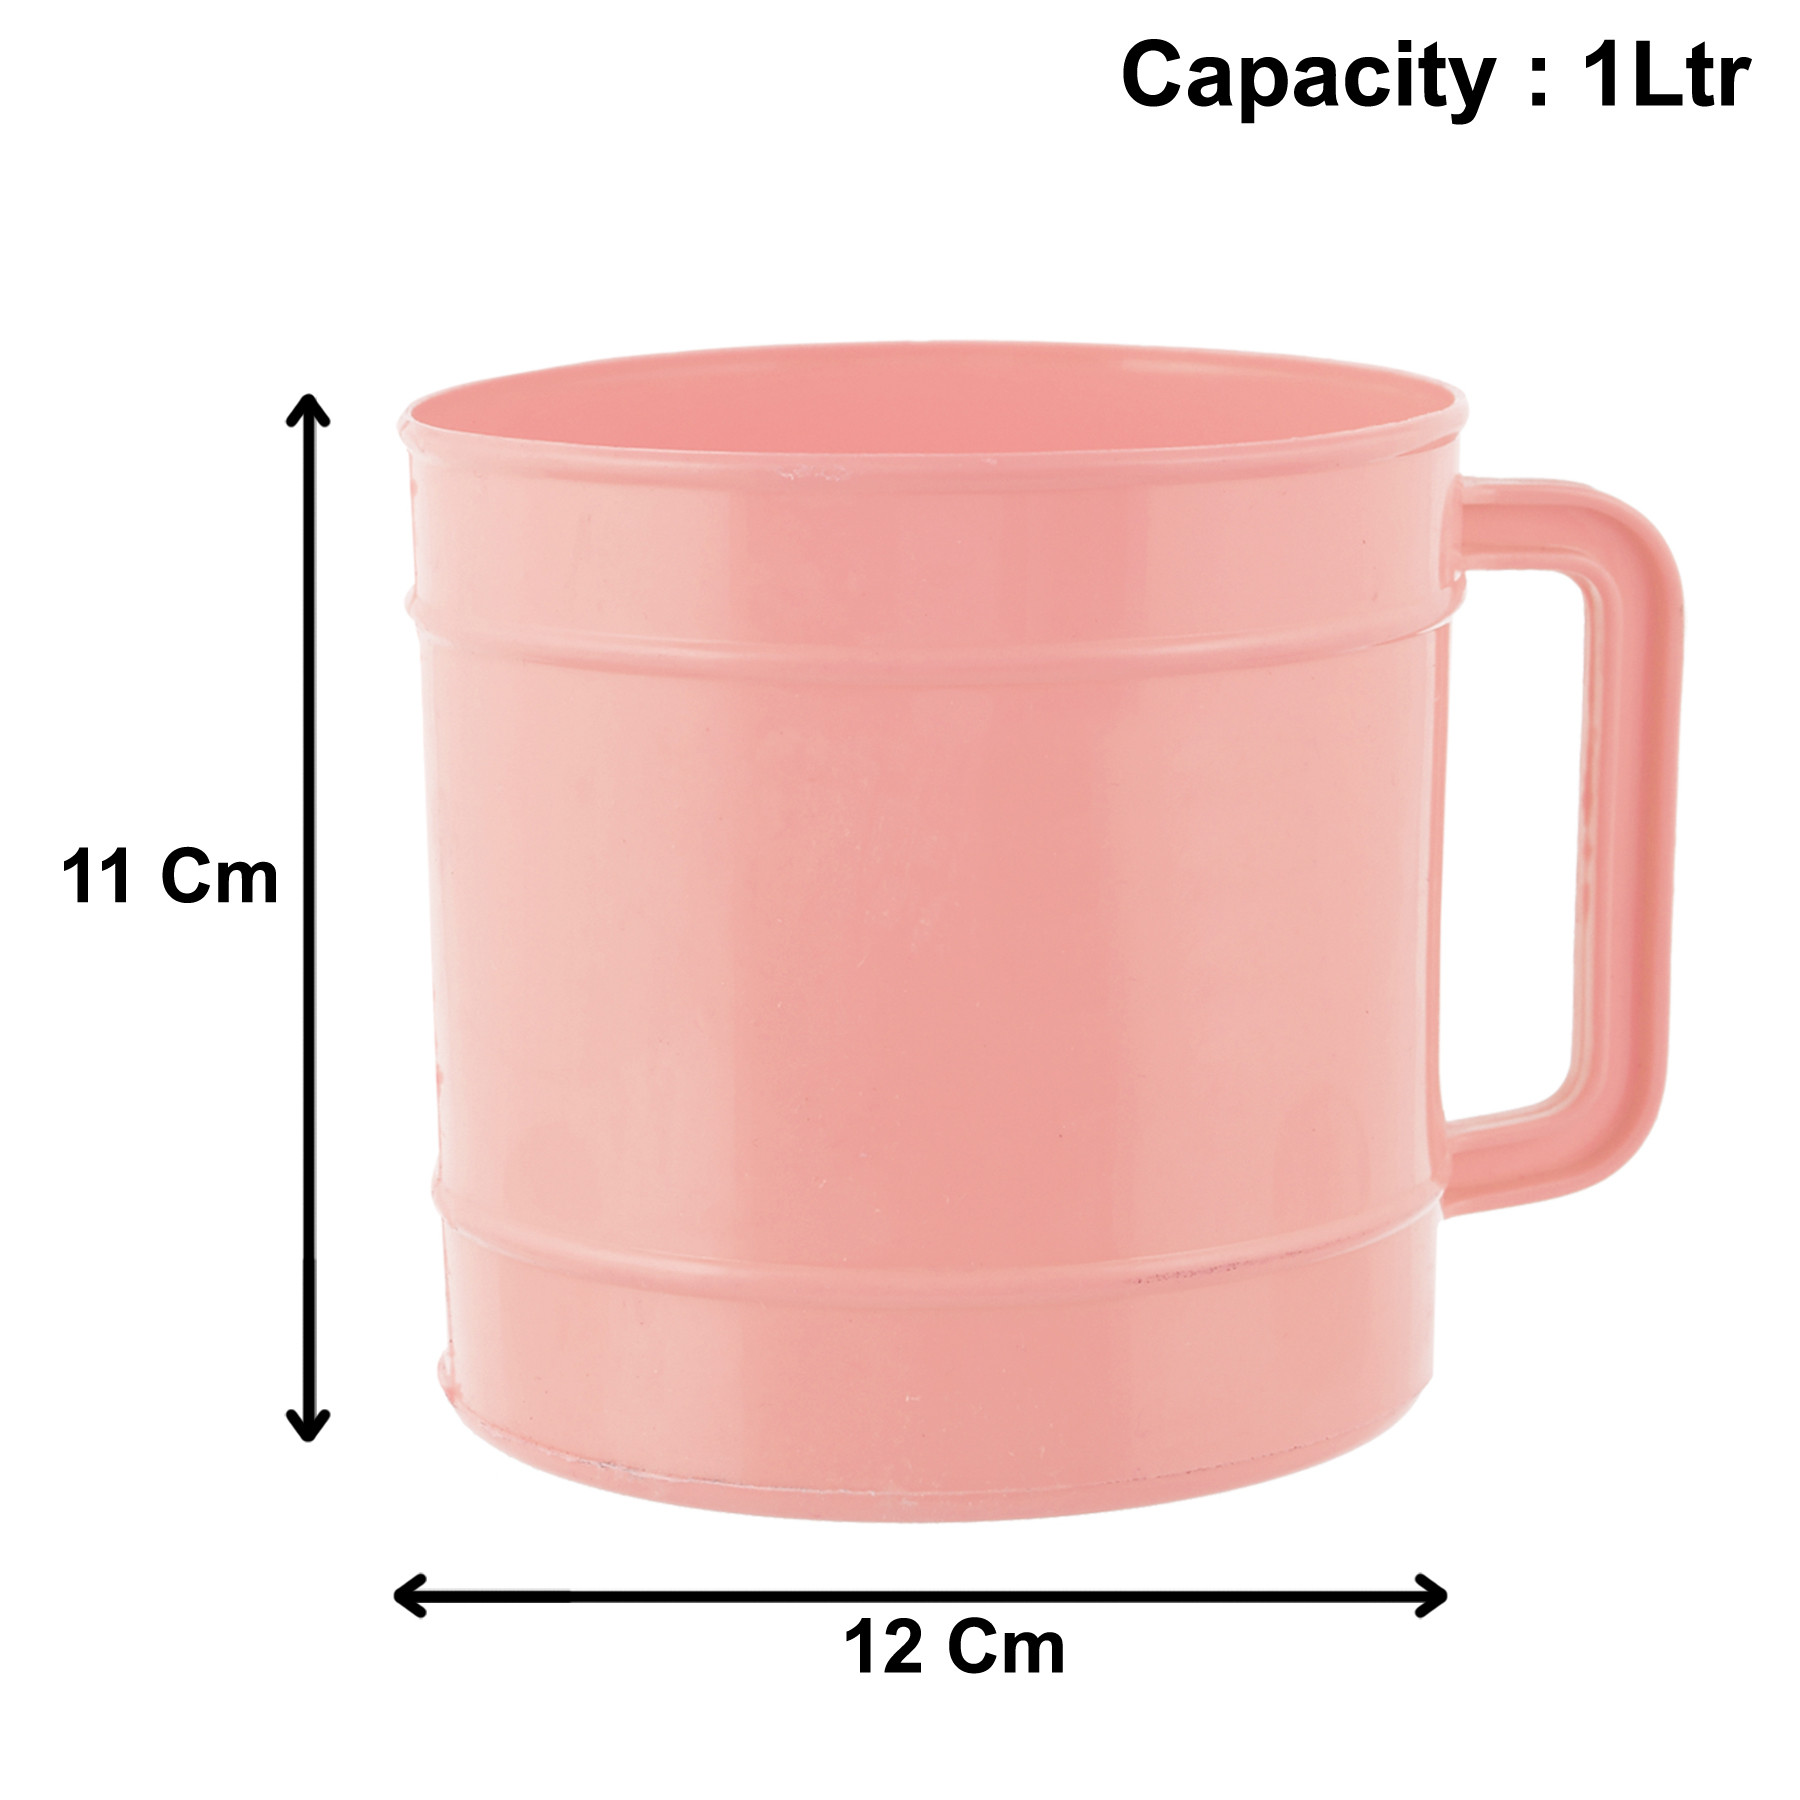 Kuber Industries Plastic Bathroom Mug, 1 Ltr., Pack of 6 (Green & Pink)